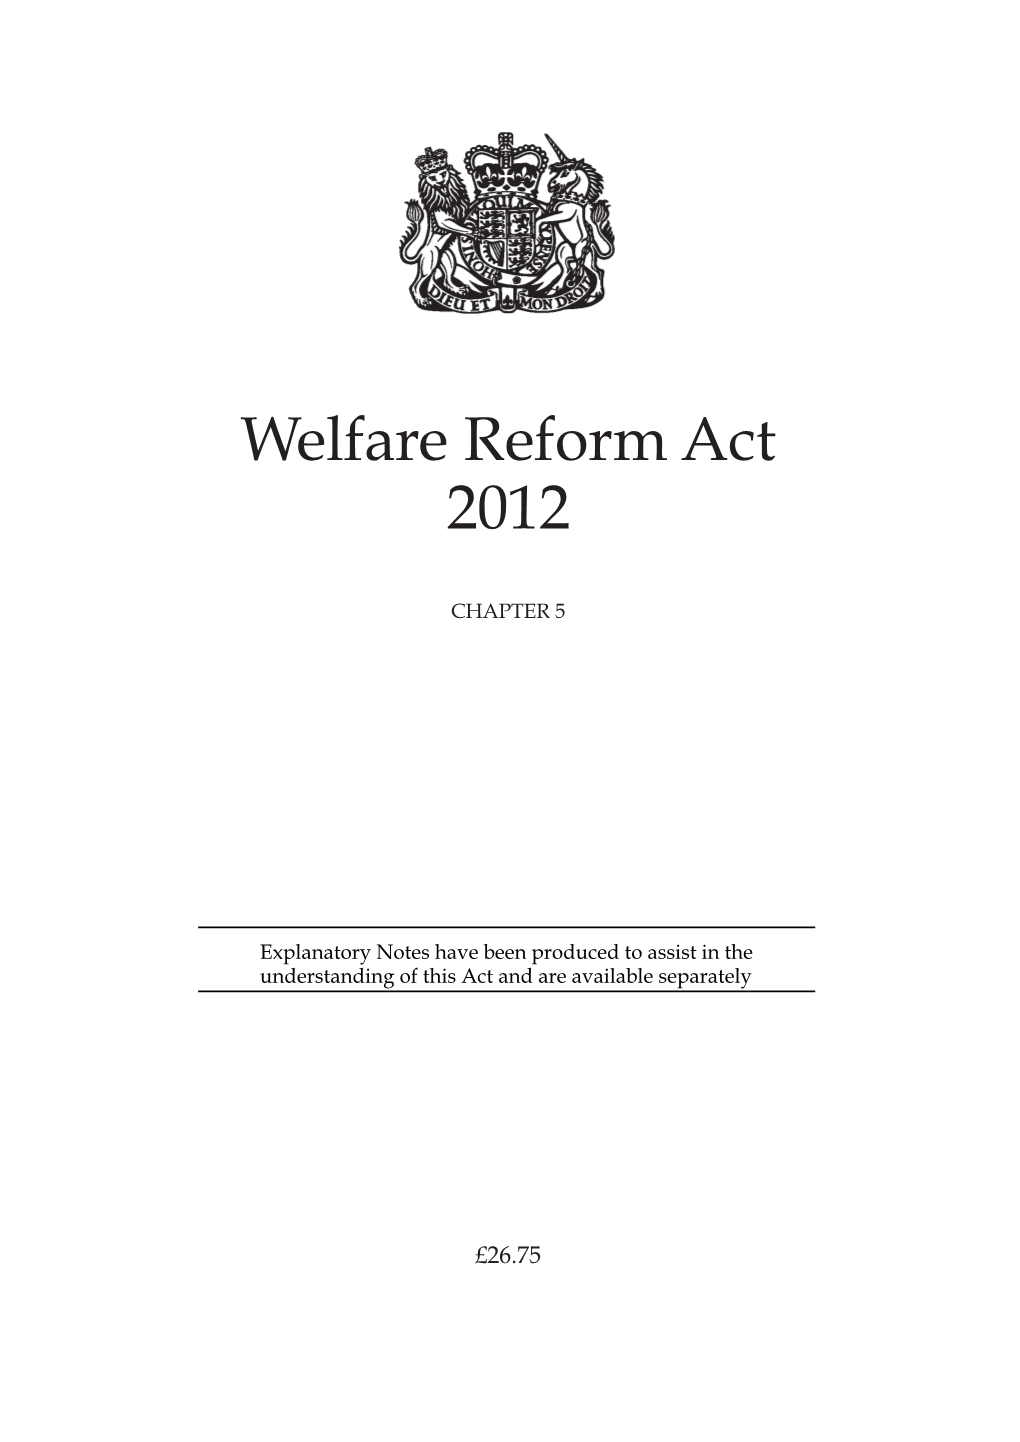 Welfare Reform Act 2012